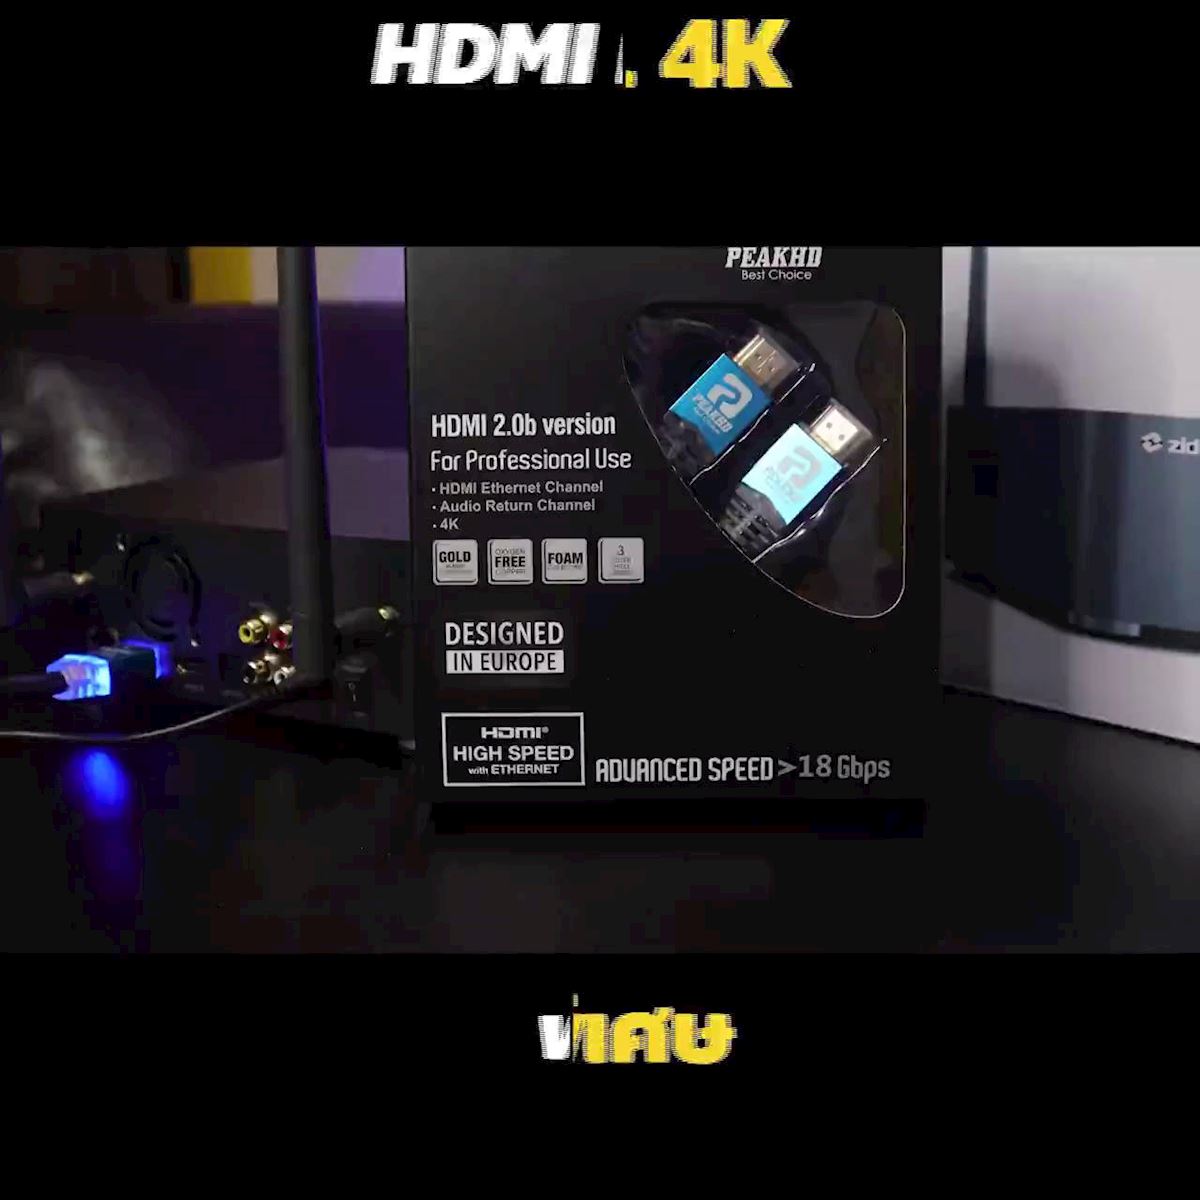 Sale 50% ## สาย HDMI 2.0B PEAK รองรับ 4K HDR10+ Dolby vision เสียง Dolby Atmos / DTS X High speed with Ethernet สำหรับ PC PS4 Xbox ## HDMI HDMI adapter สายเชื่อมต่อtv hdmi hdmi to vga converter hdmiมือถือออกทีวี